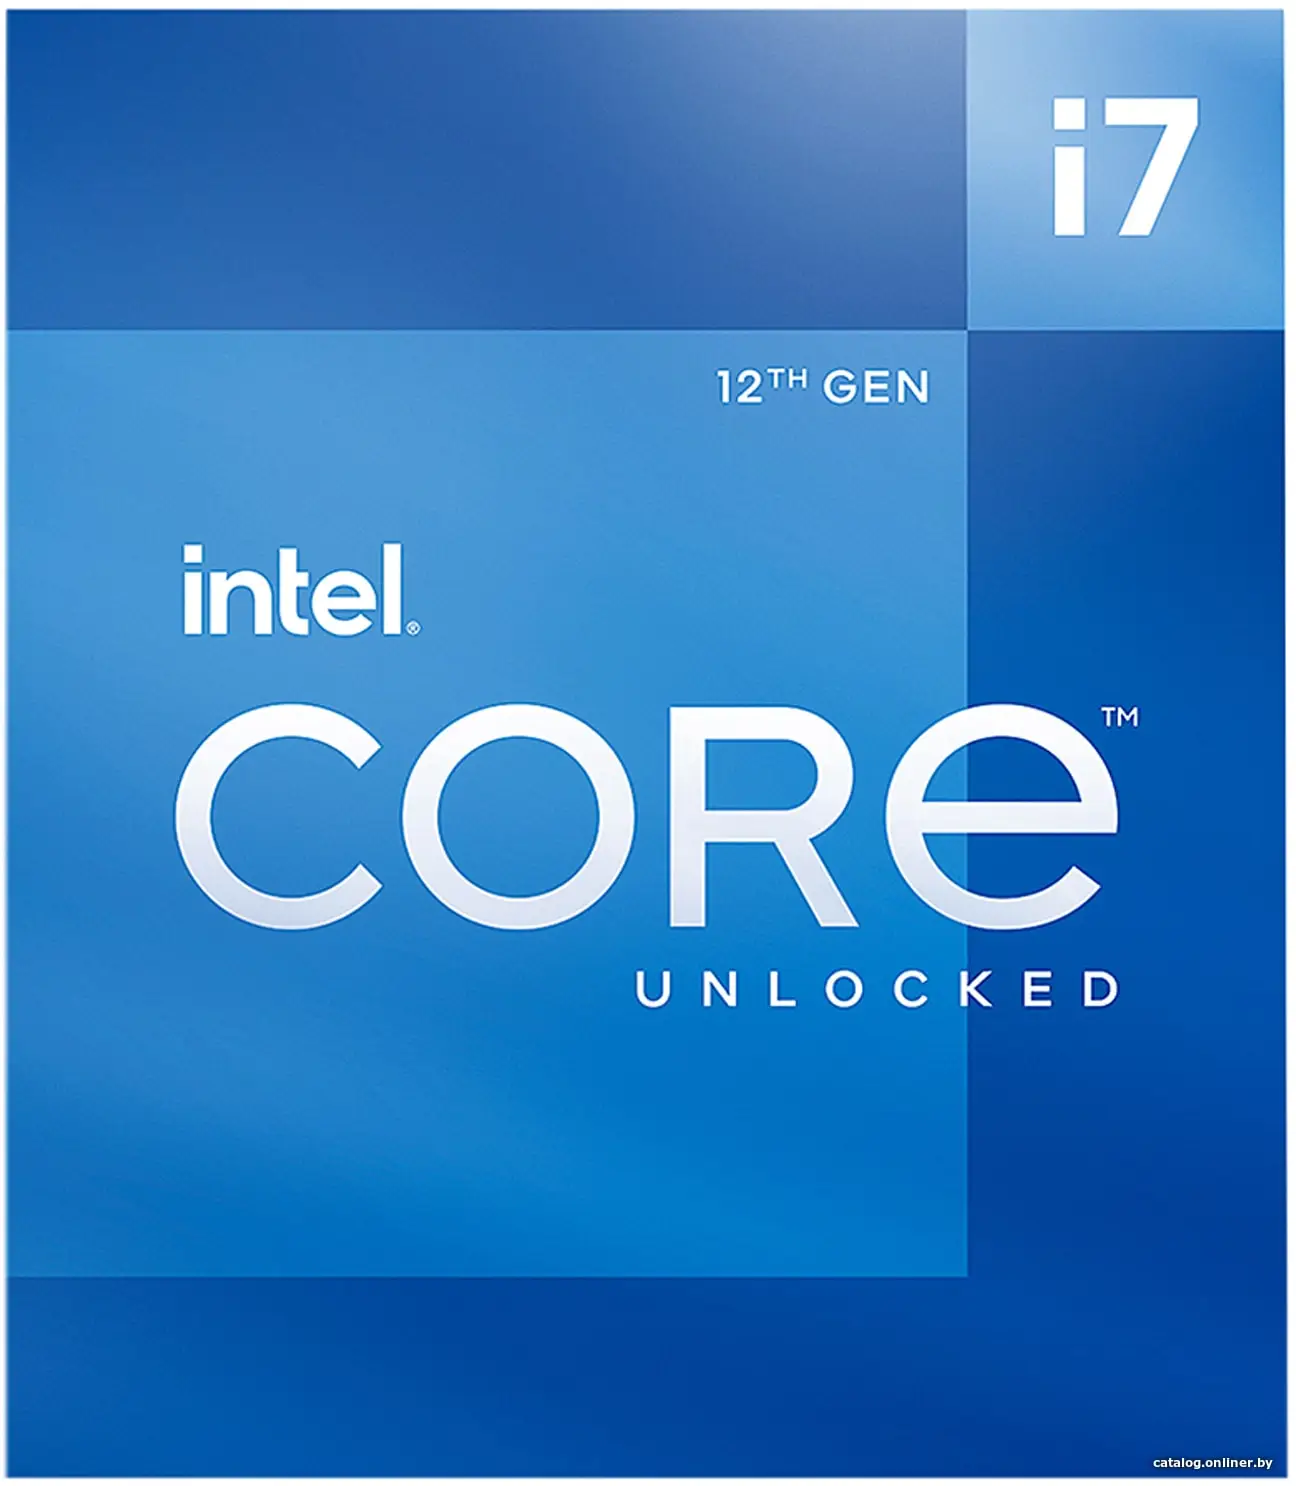 Купить Процессор Intel Core i7-12700KF OEM CM8071504553829, цена, опт и розница